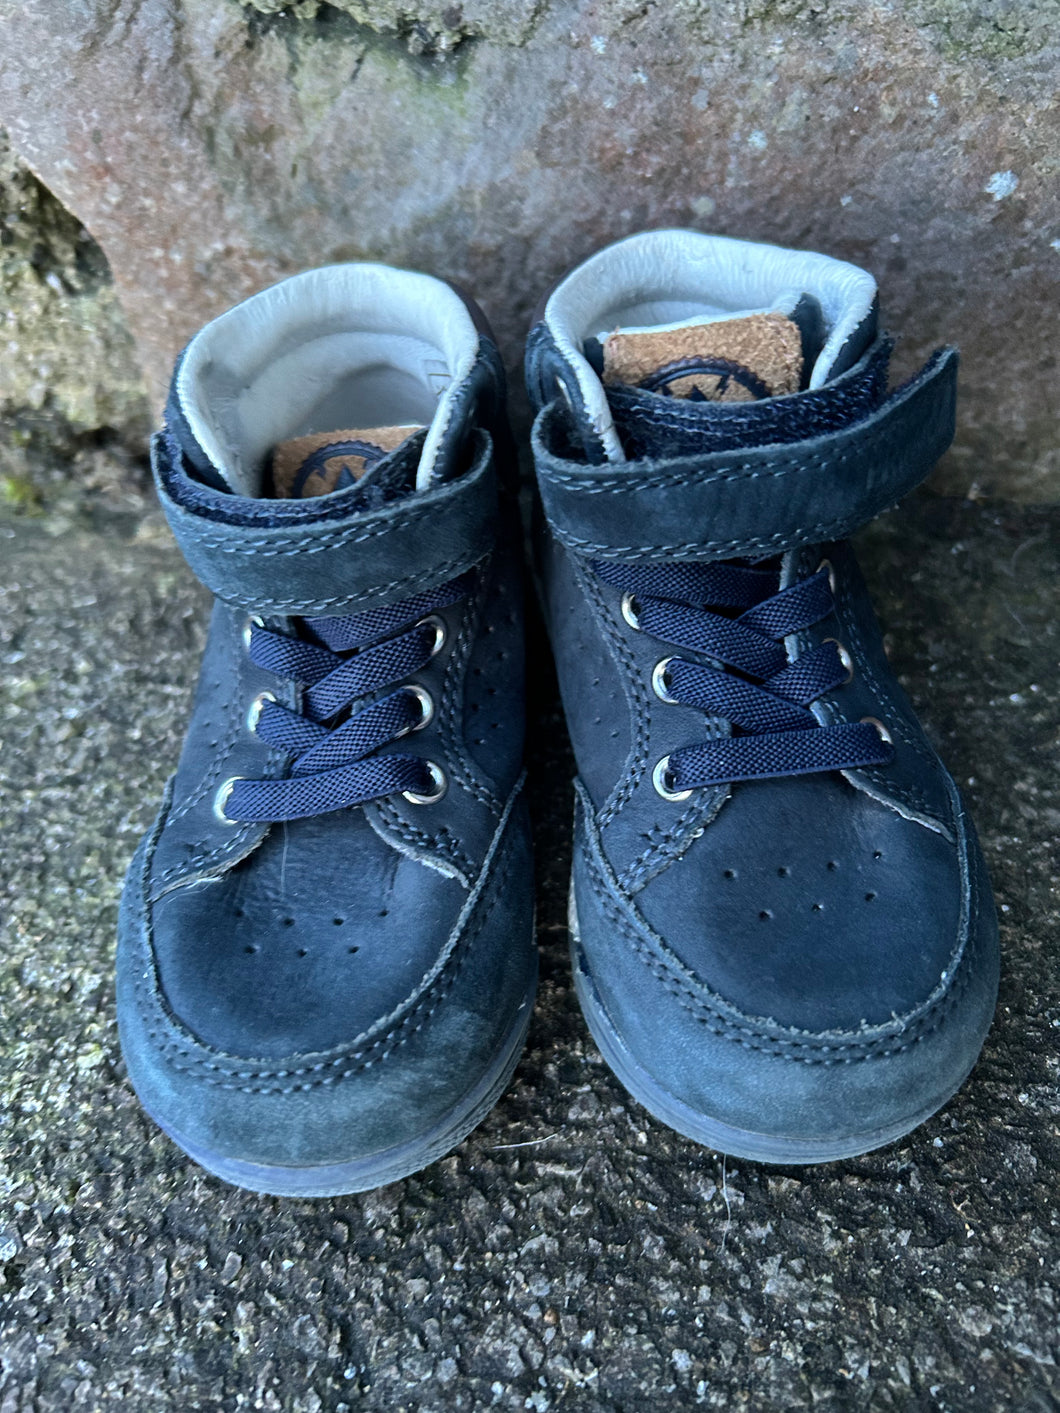 Navy leather boots  uk 4.5 (eu 21)